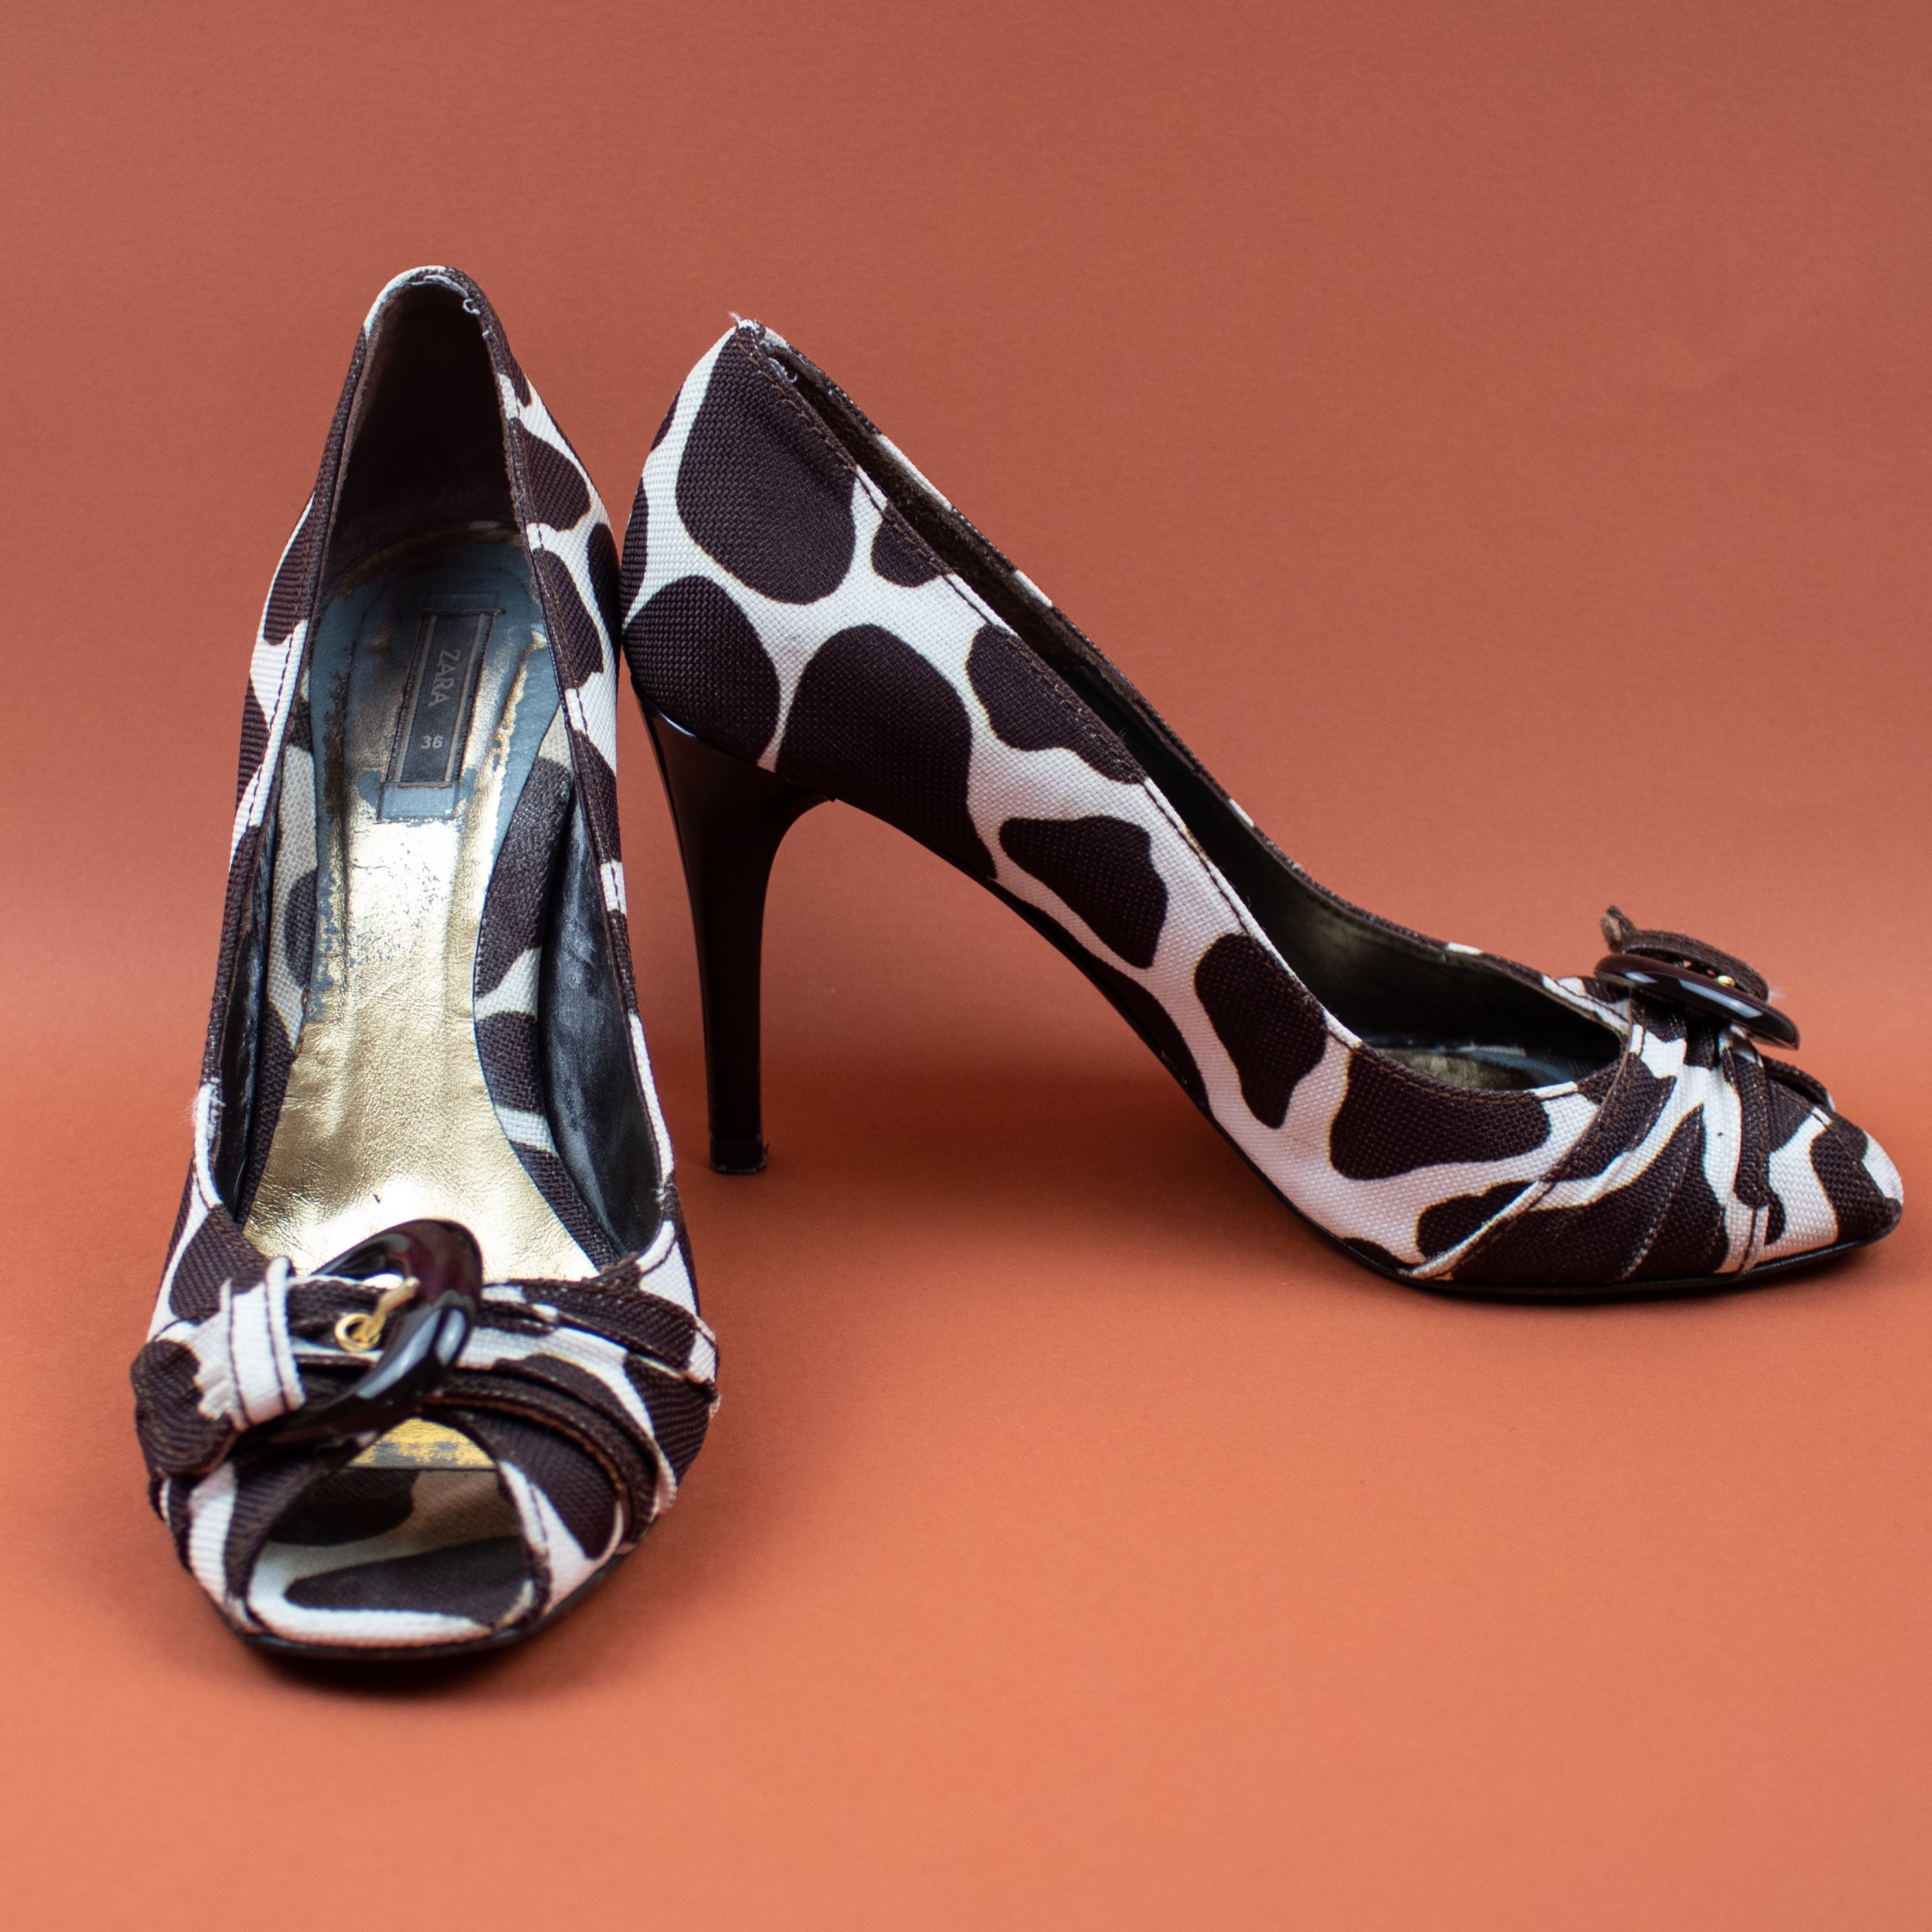 Leopard Print Stiletto - Buy Leopard Print Stiletto online in India